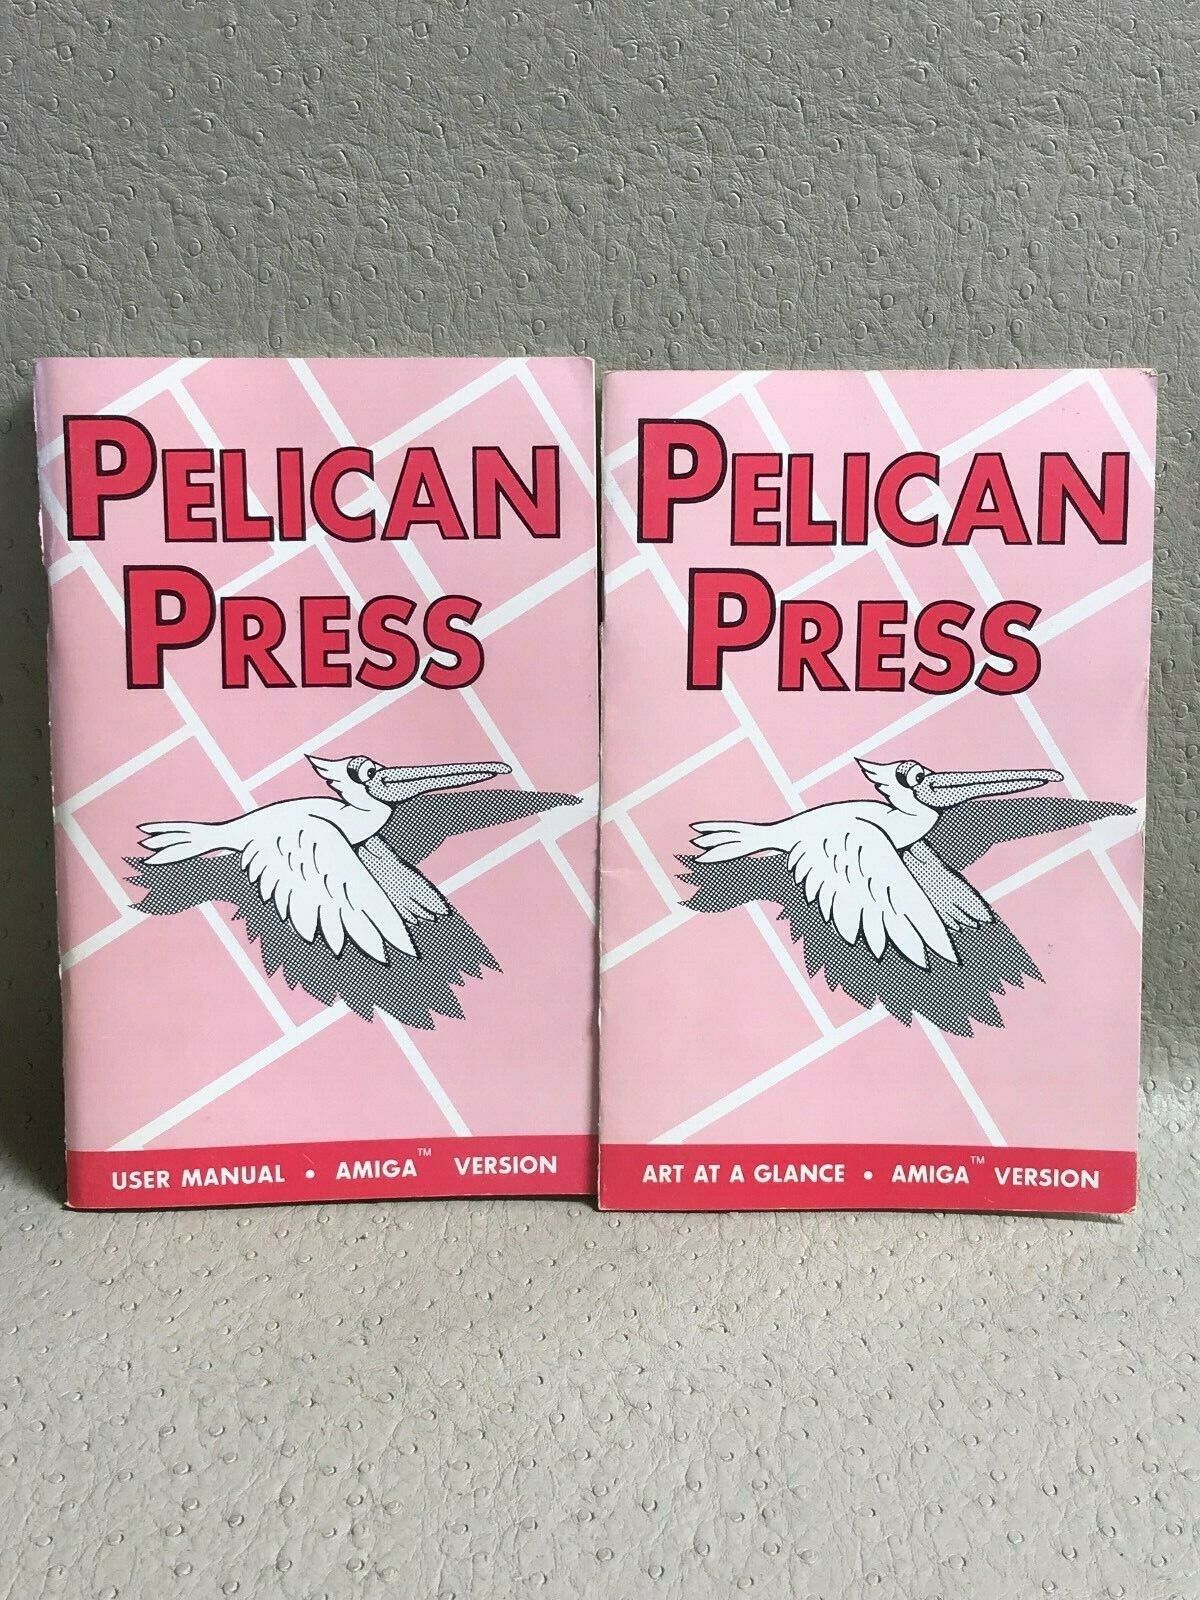 Pelican Press | Amiga Version | User Manual and Art Book ONLY | #3672